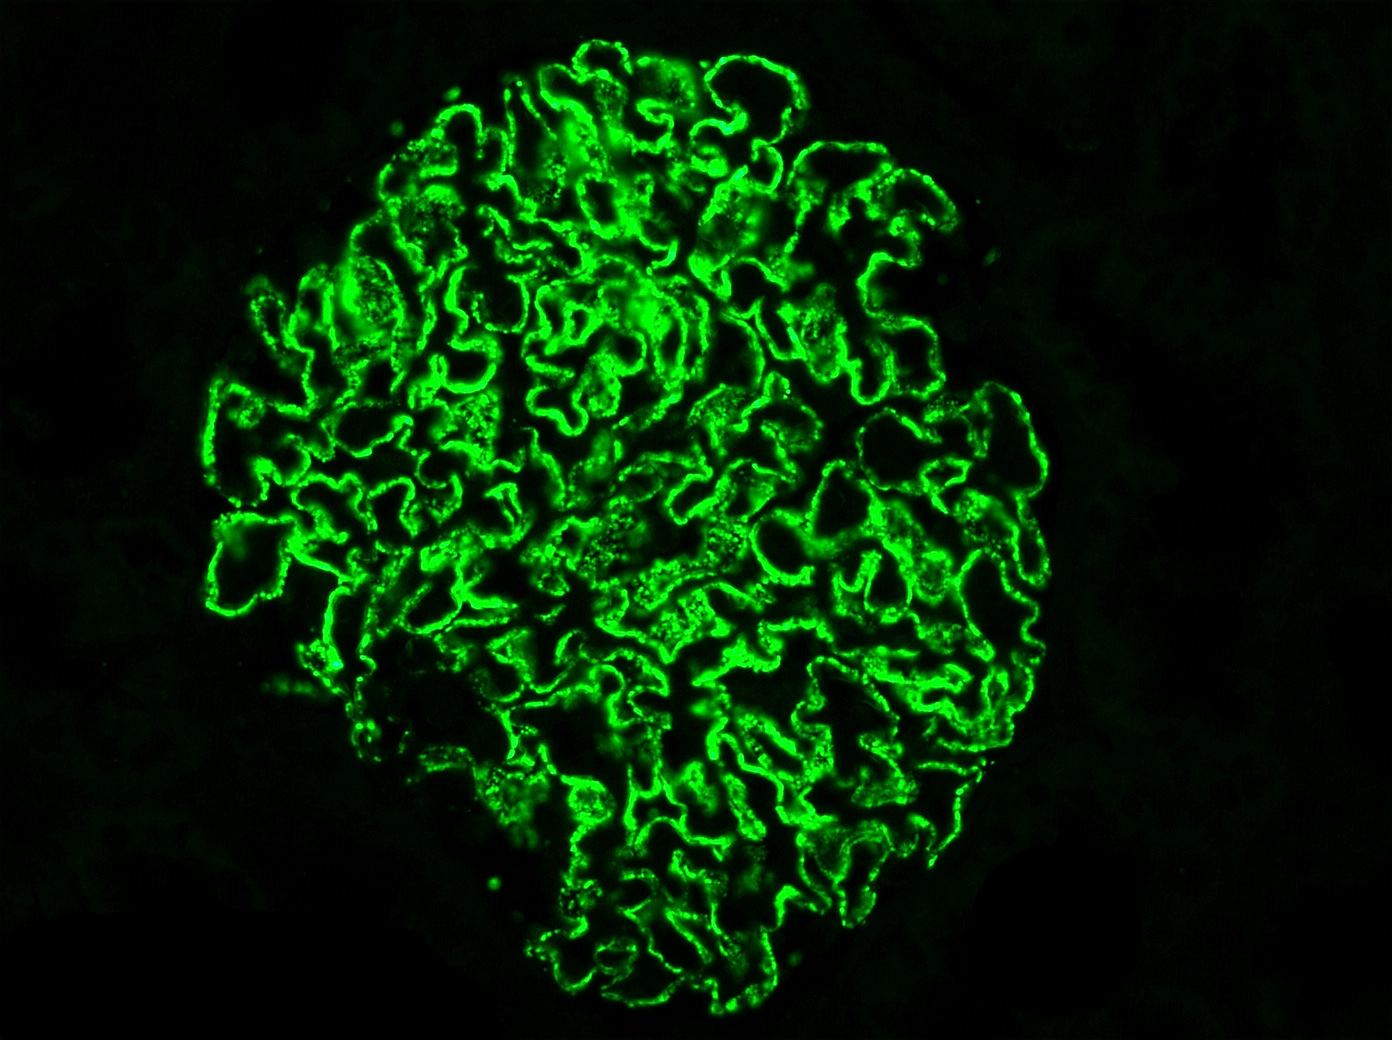 immunofluorescence stain of a kidney biopsy showing a glomerulus